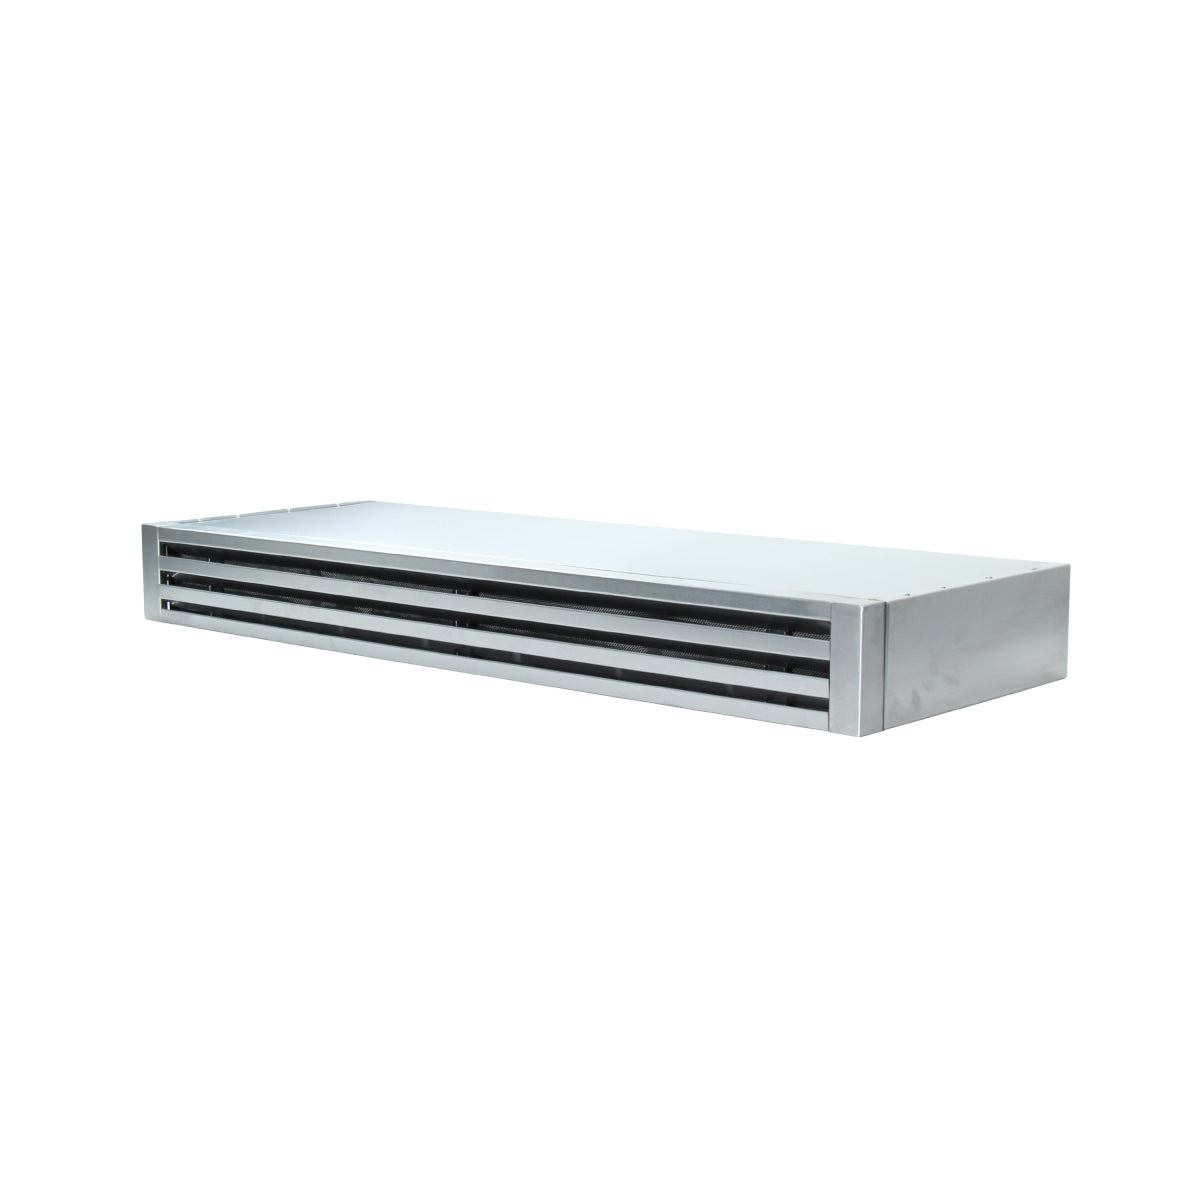 A rectangular metal vent with horizontal slats, ideal for 30 inch range hoods, is the ProlineRangeHoods.com Recirculating Kit.